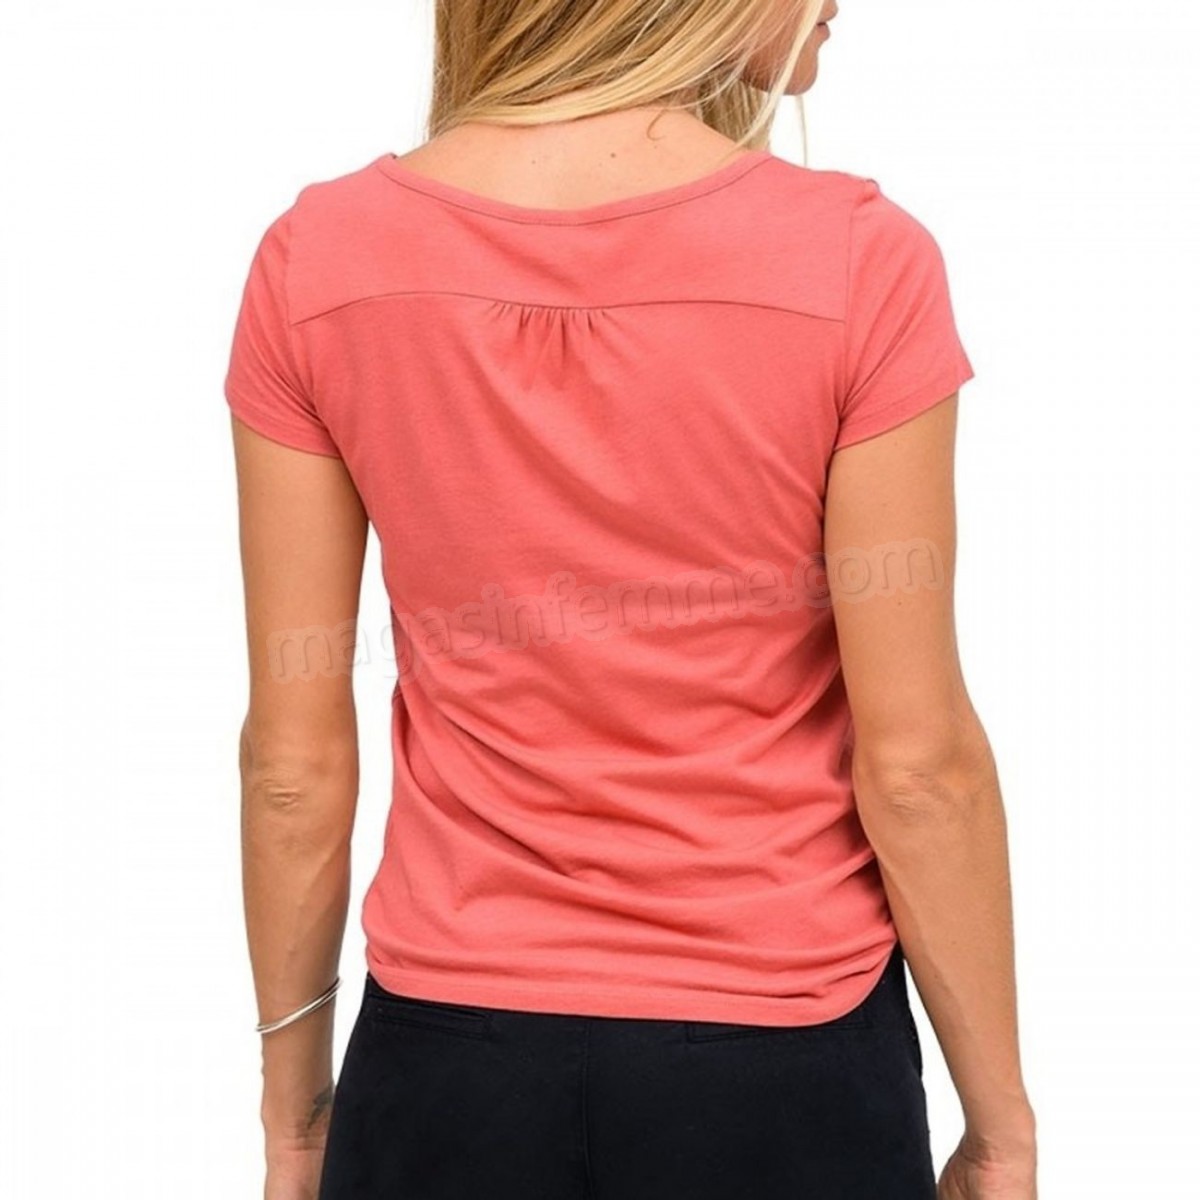 Oxbow-Mode- Lifestyle femme OXBOW Tee Shirt Corail Femme OXBOW TILDA en solde - -1